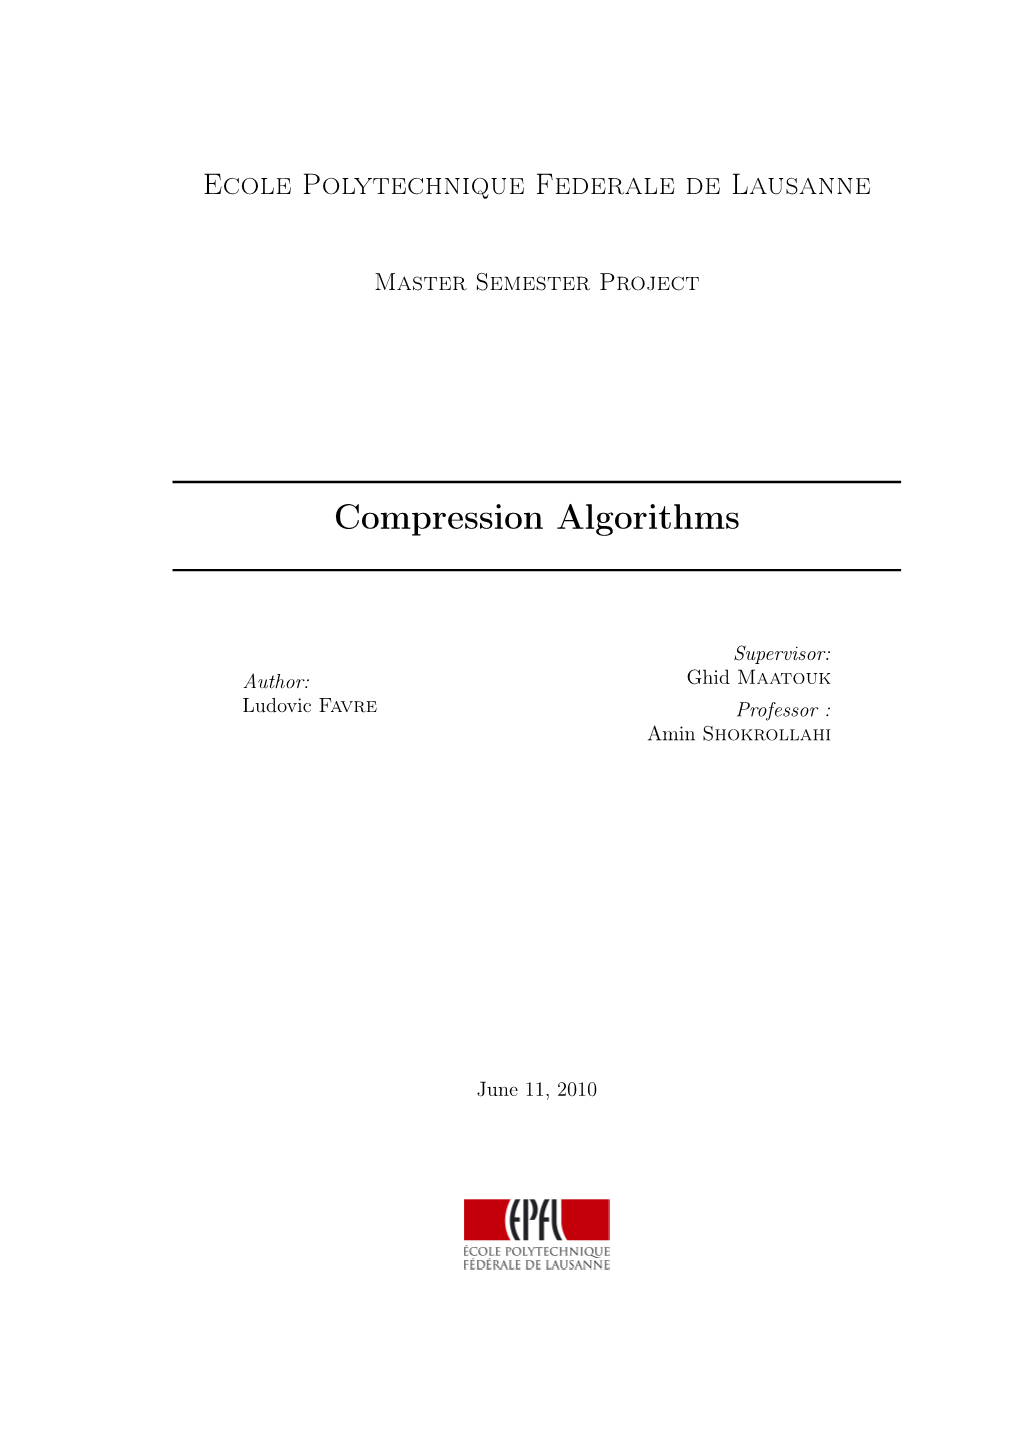 Compression Algorithms